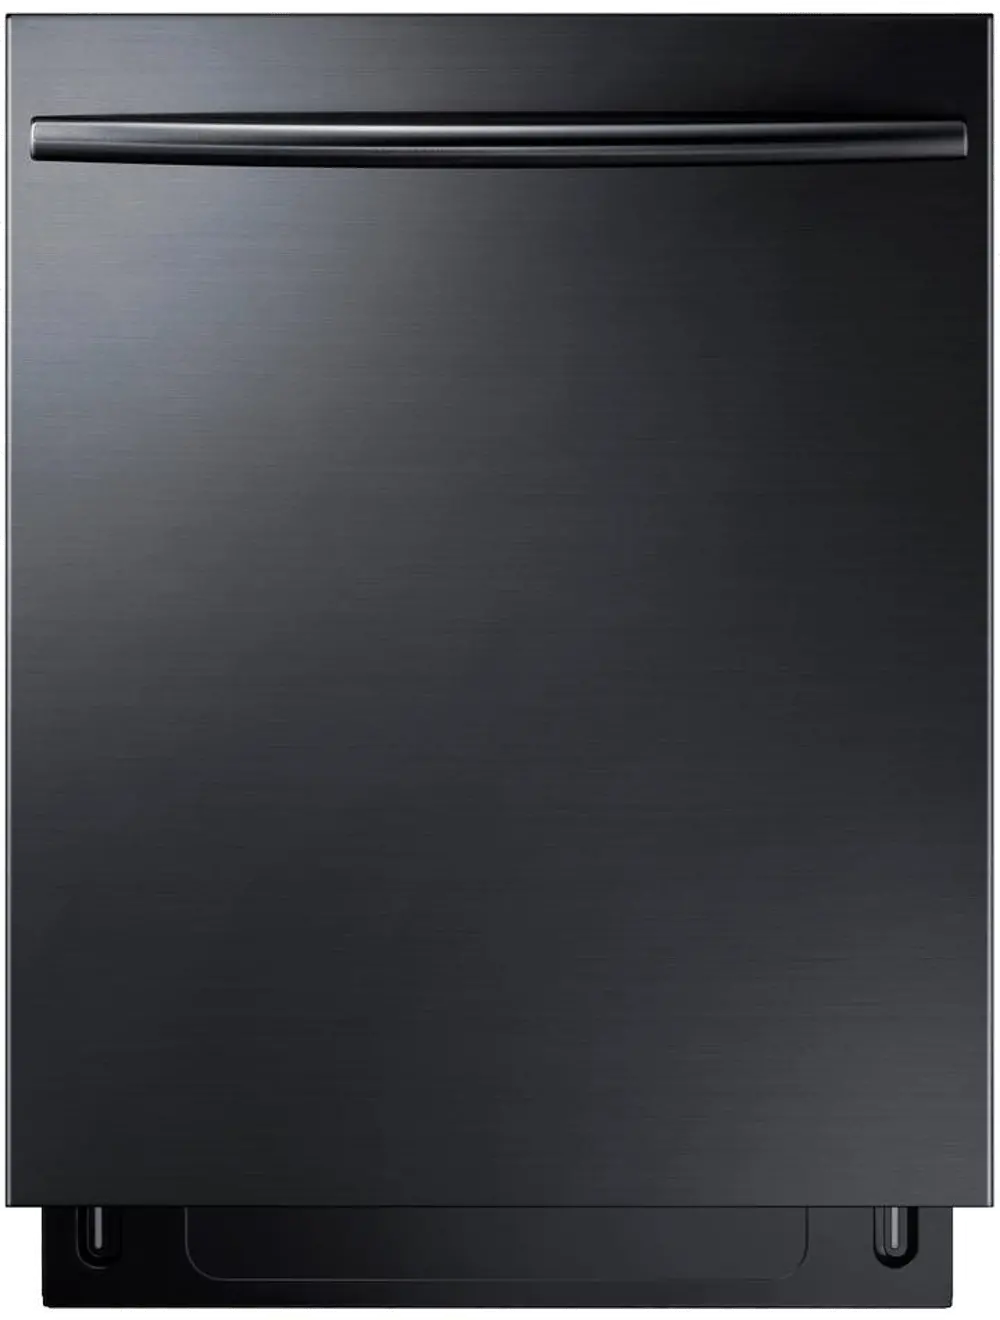 DW80K7050UG Samsung Top Control Dishwasher - Black Stainless Steel-1